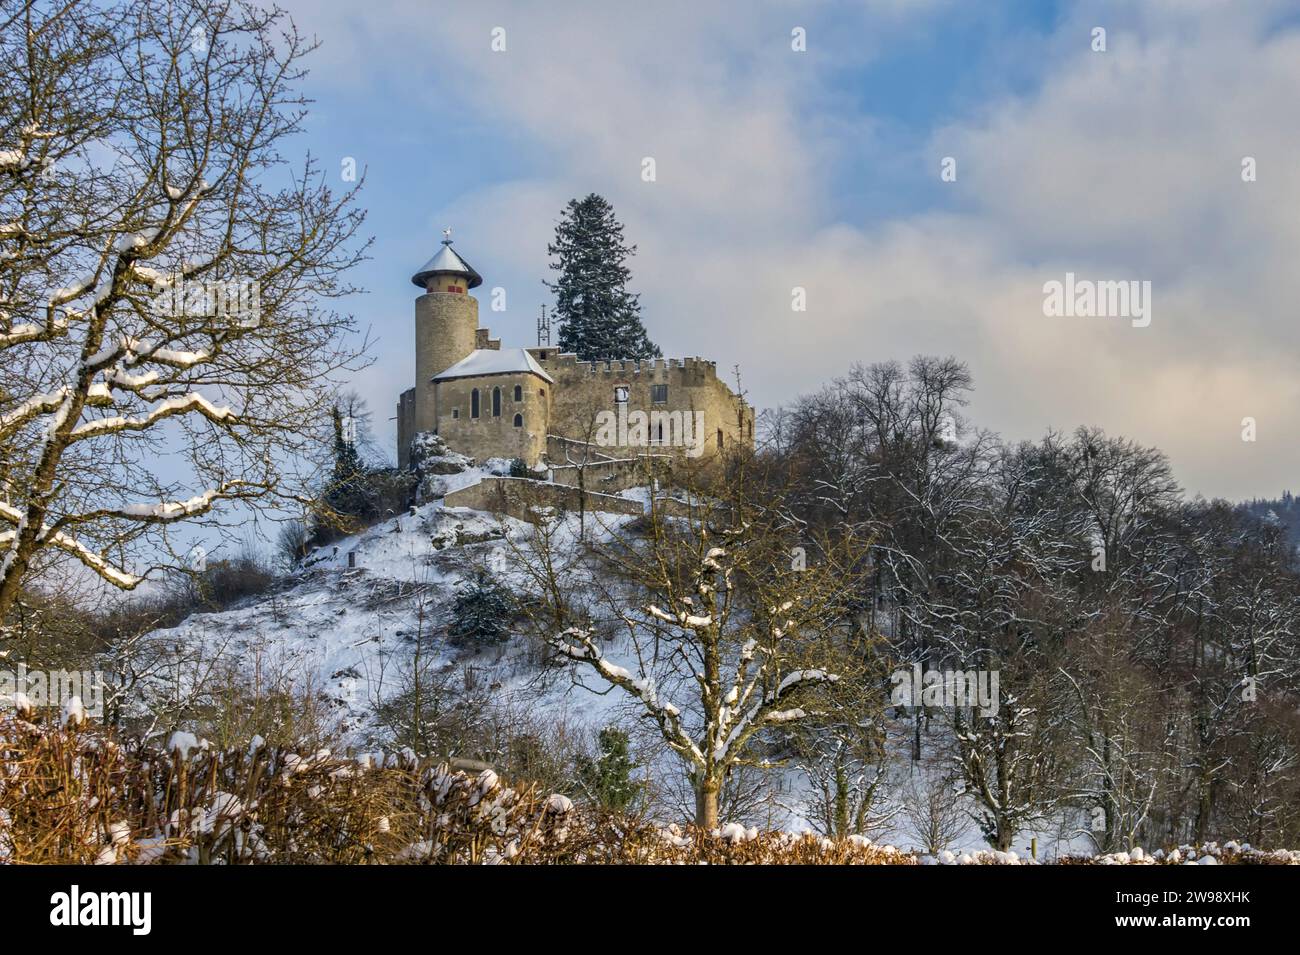 Svizzera, Arlesheim, Birseck, Hermitage, Castello di Birseck, castello, Baselland, Baselbiet, foto invernali, neve Foto Stock